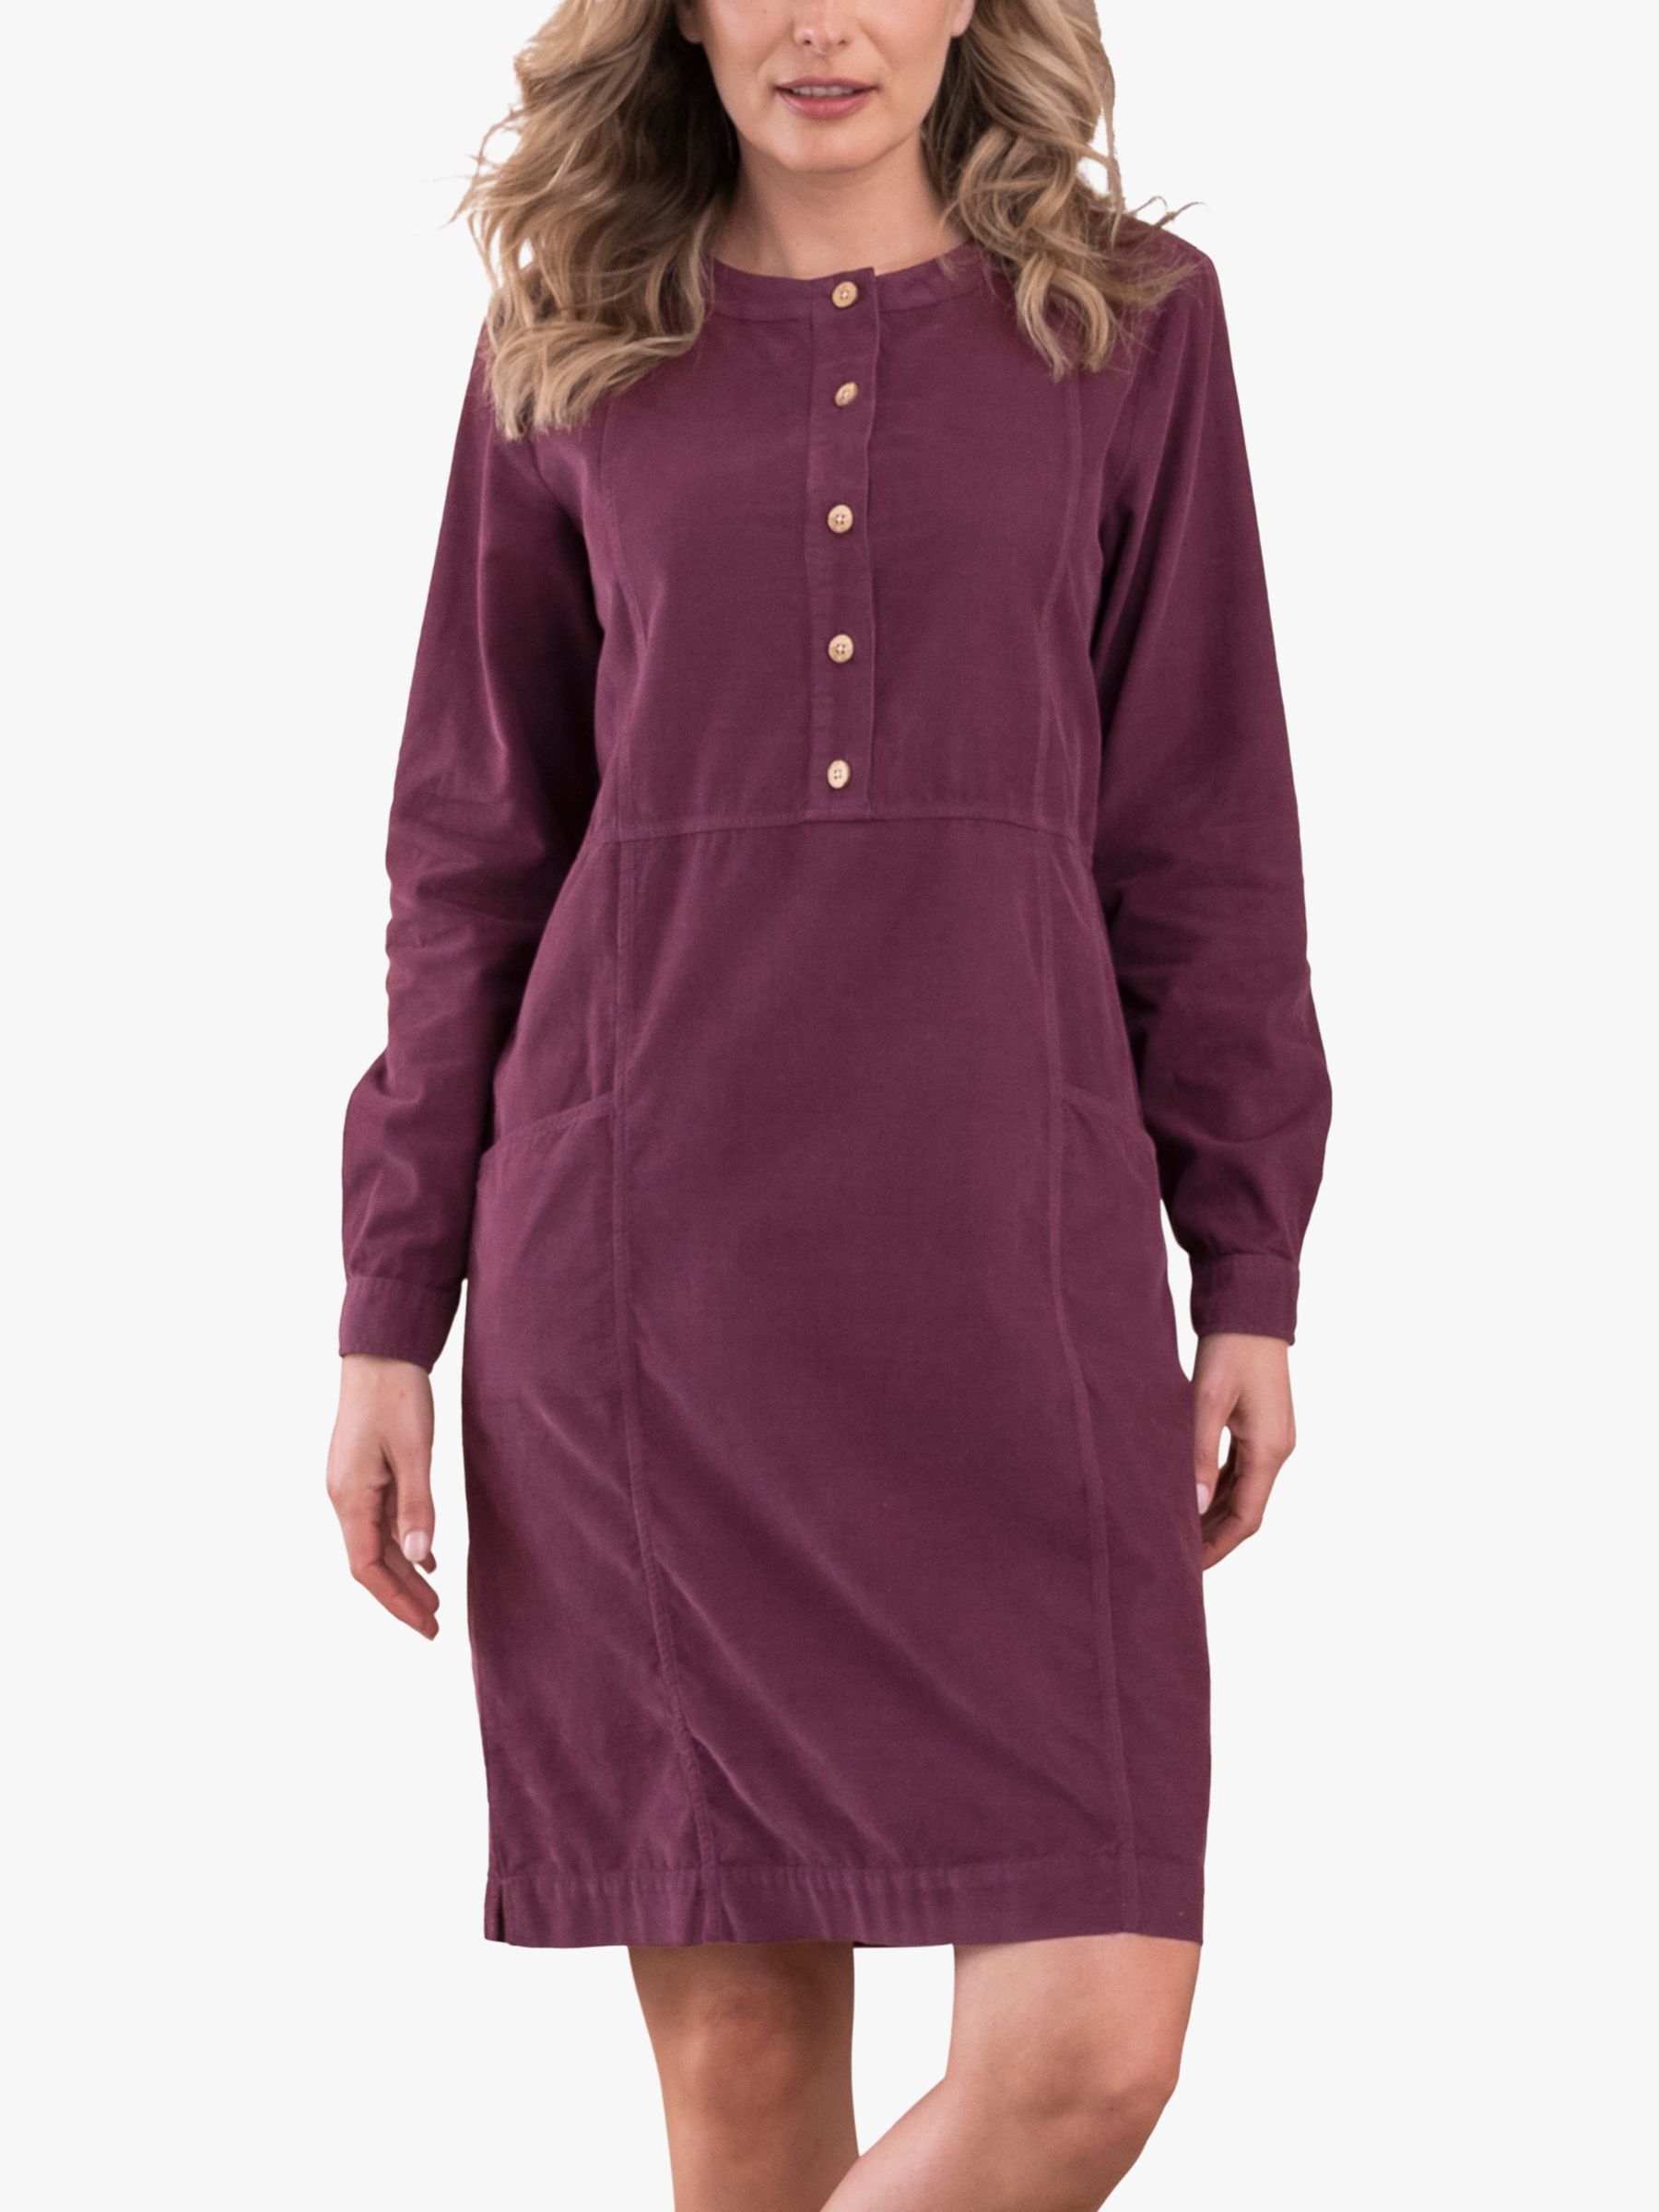 Celtic & Co. Baby Cord Knee Length Cotton Dress, Damson, 8